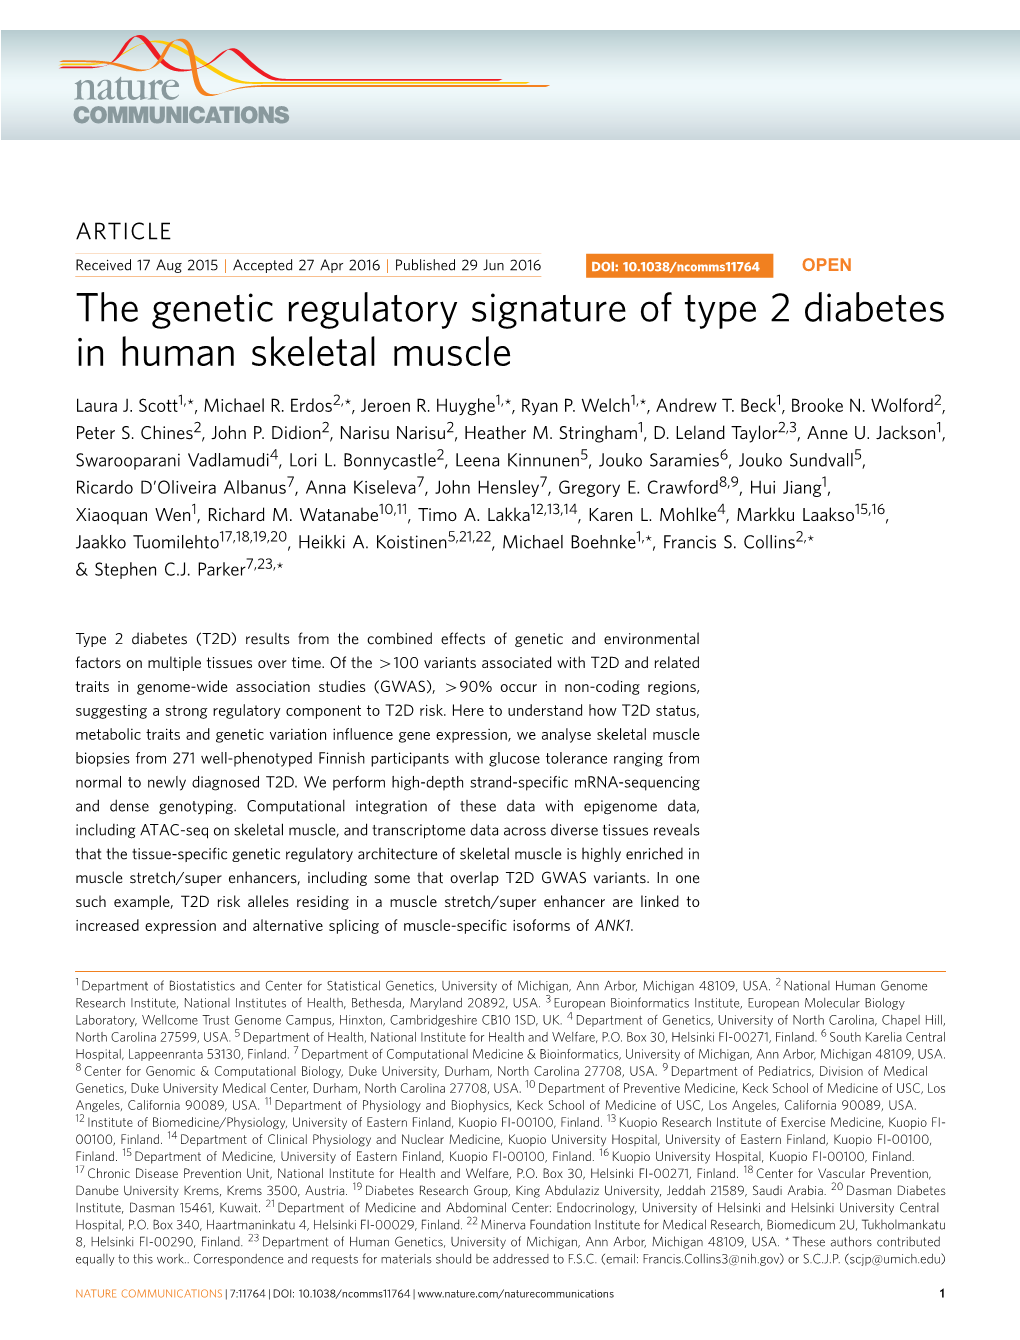 The Genetic Regulatory Signature of Type 2 Diabetes in Human Skeletal Muscle